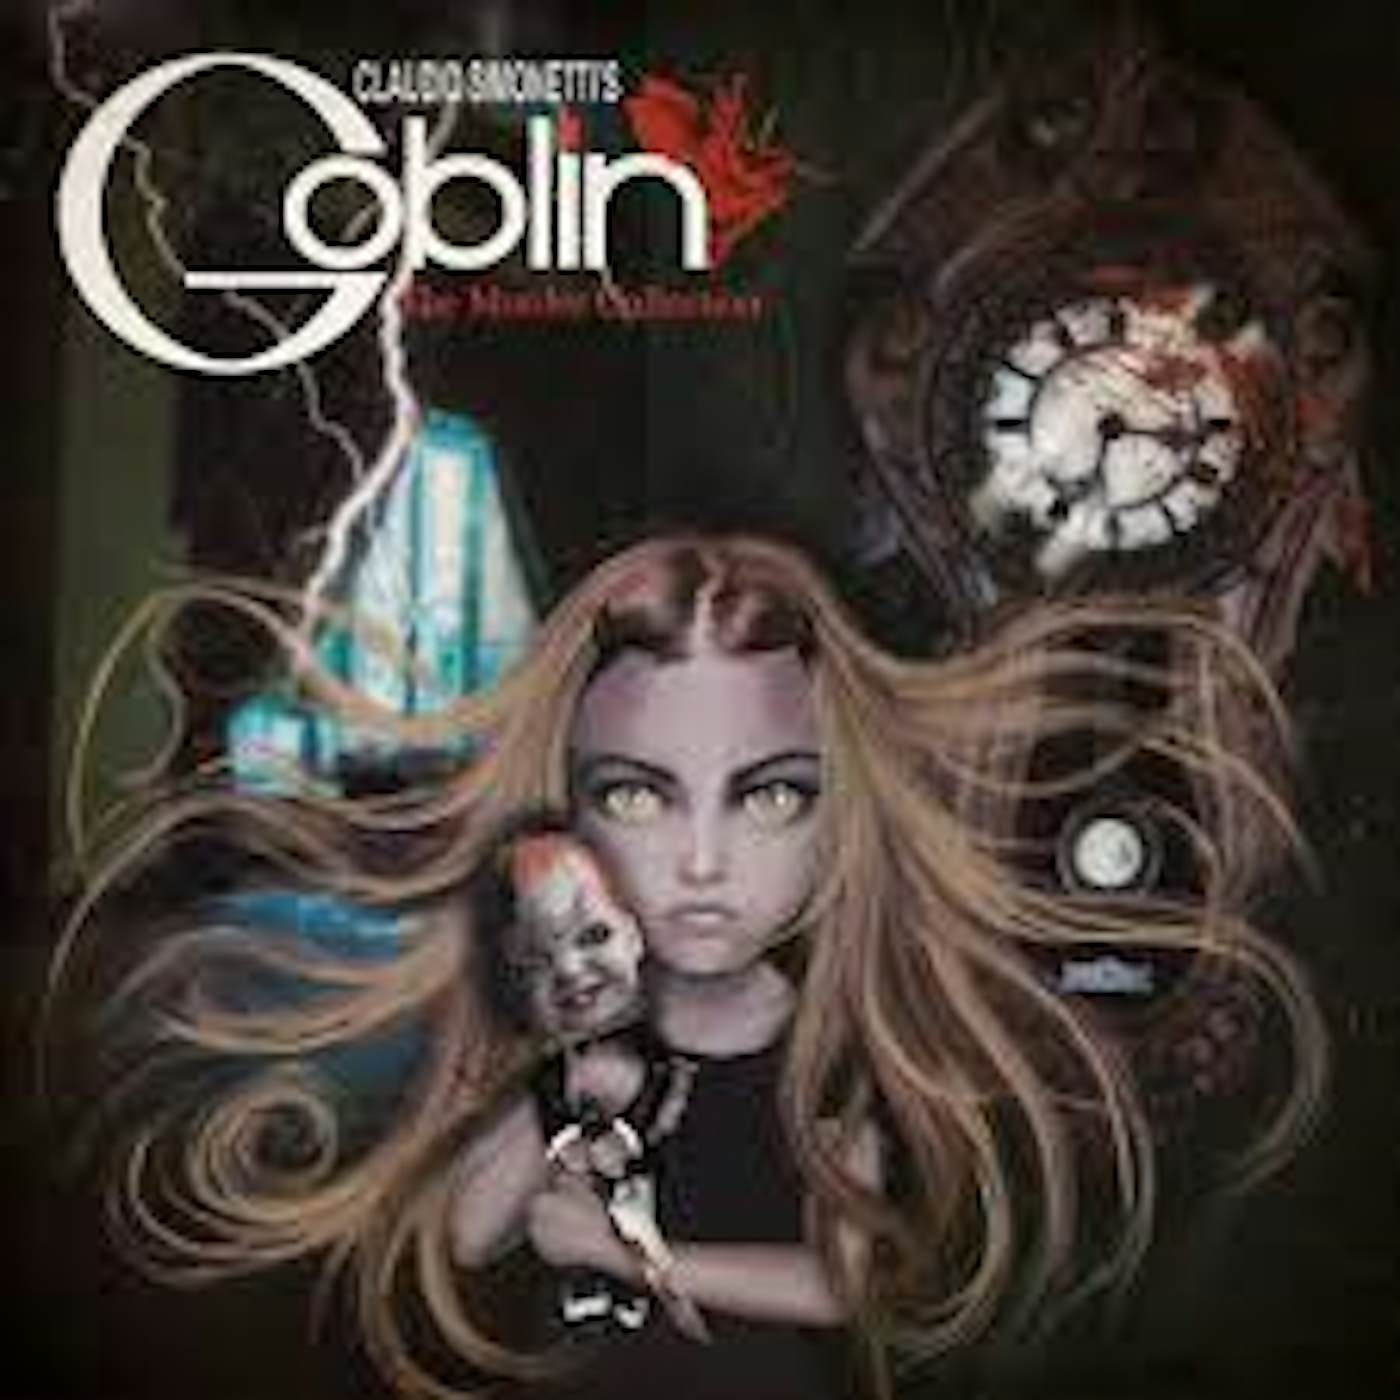 Claudio Simonetti's Goblin MURDER COLLECTION Vinyl Record